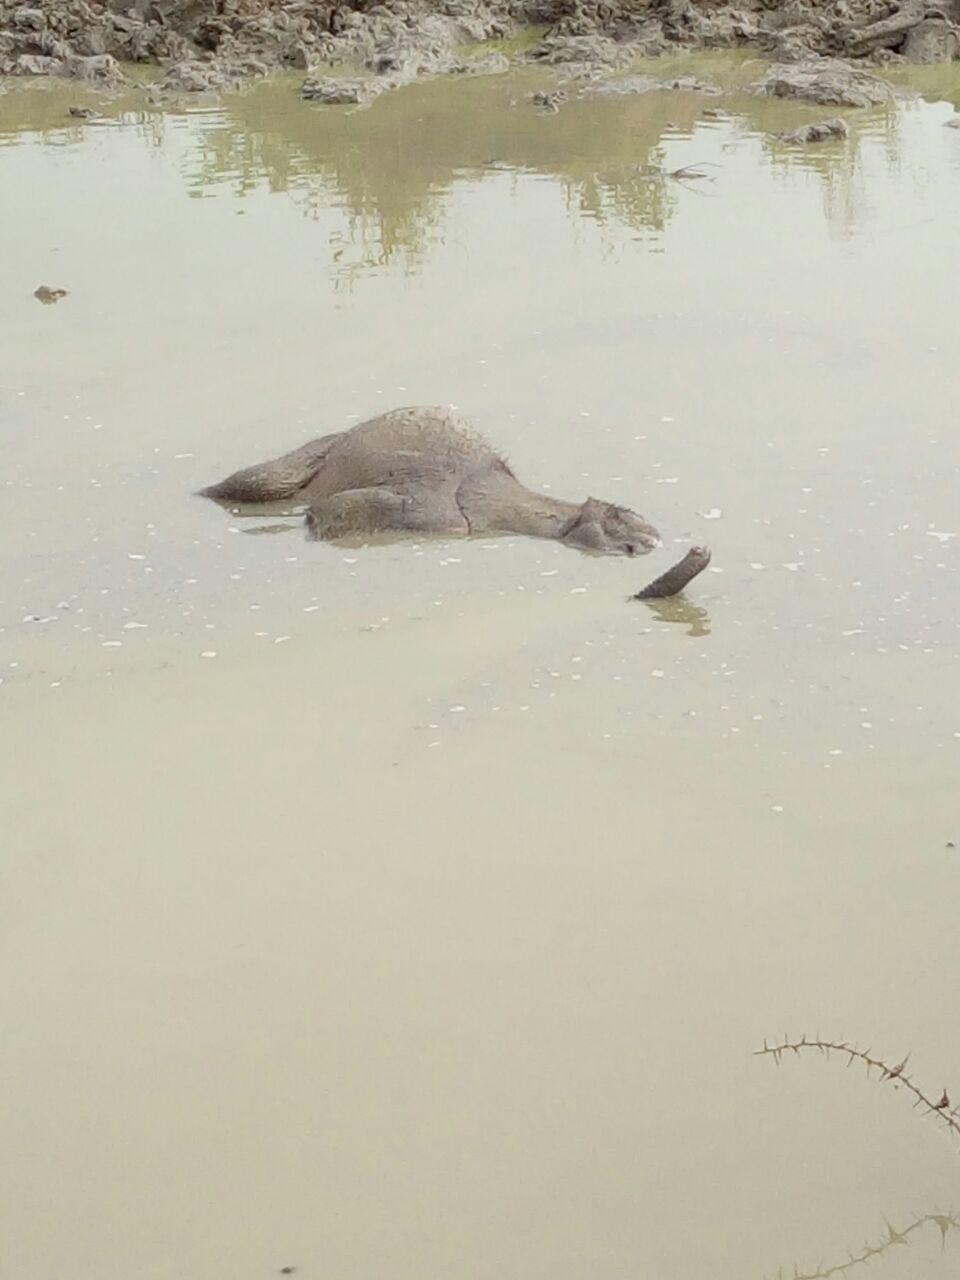 Dololo was submerged in a muddy pool outside in Kenya in 2018. (Courtesy of <a href="https://www.facebook.com/SheldrickTrust/" target="_blank" rel="noopener">Sheldrick Wildlife Trust</a>)